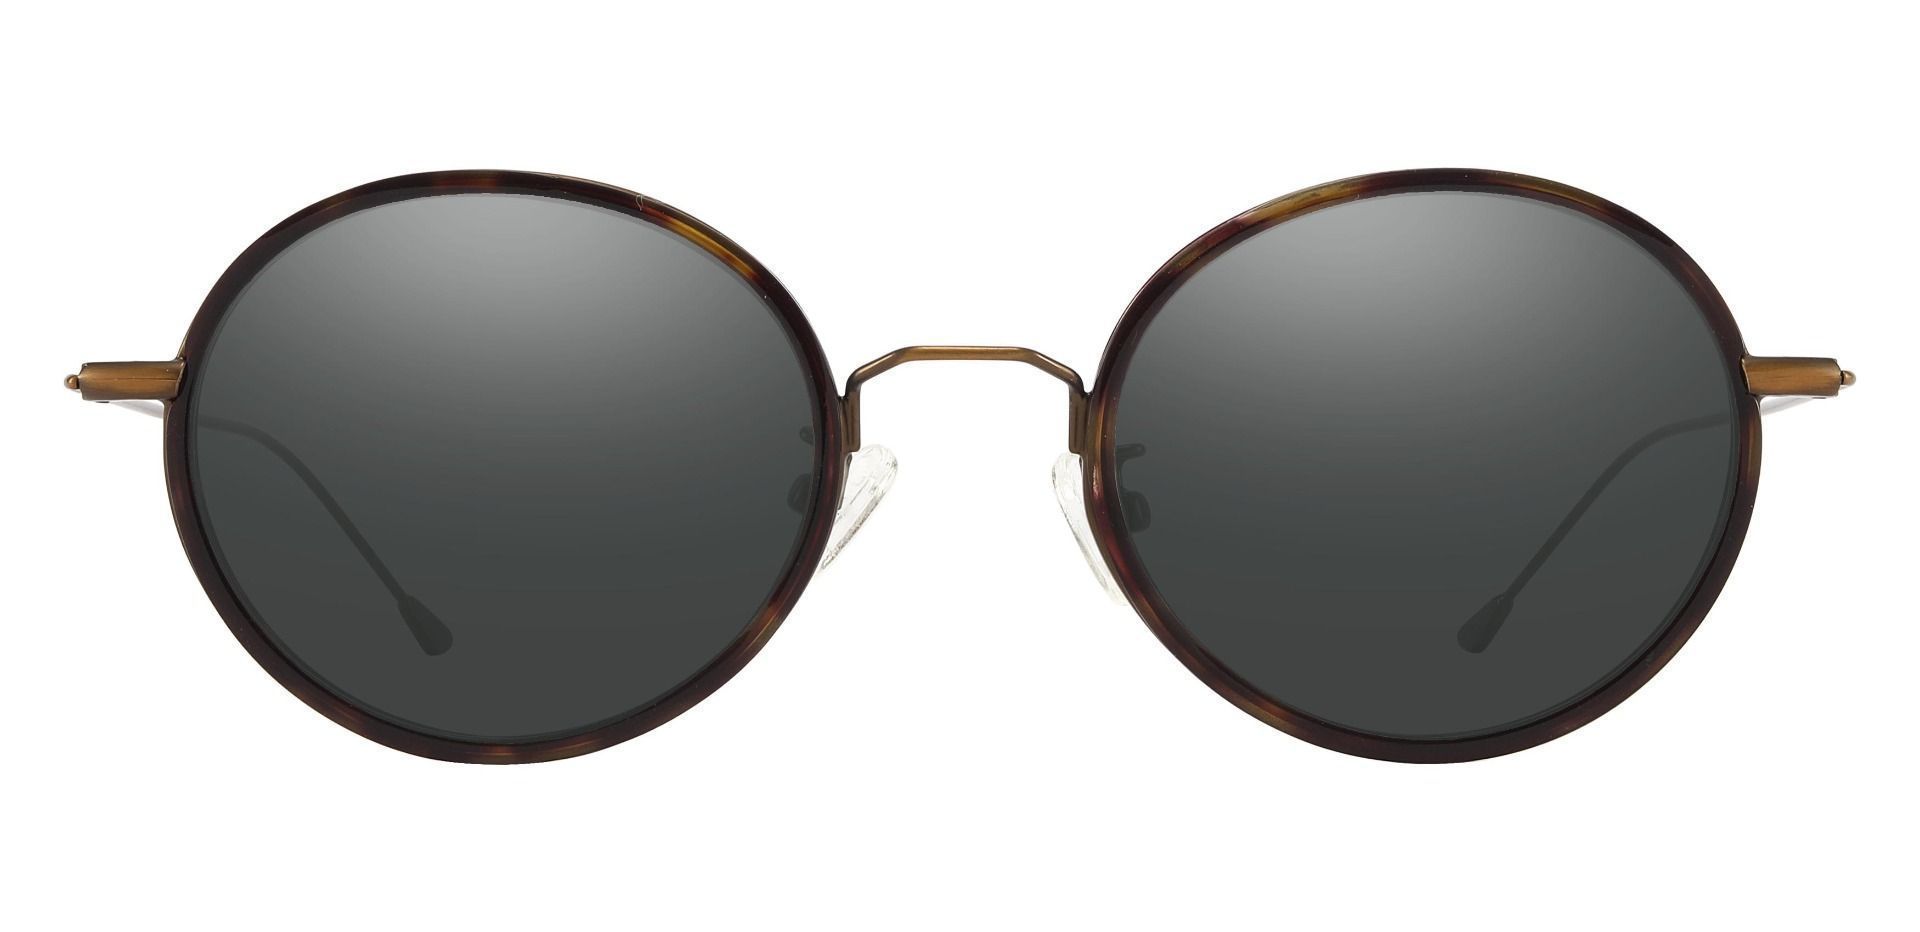 Malverne Oval Lined Bifocal Sunglasses - Tortoise Frame With Gray Lenses